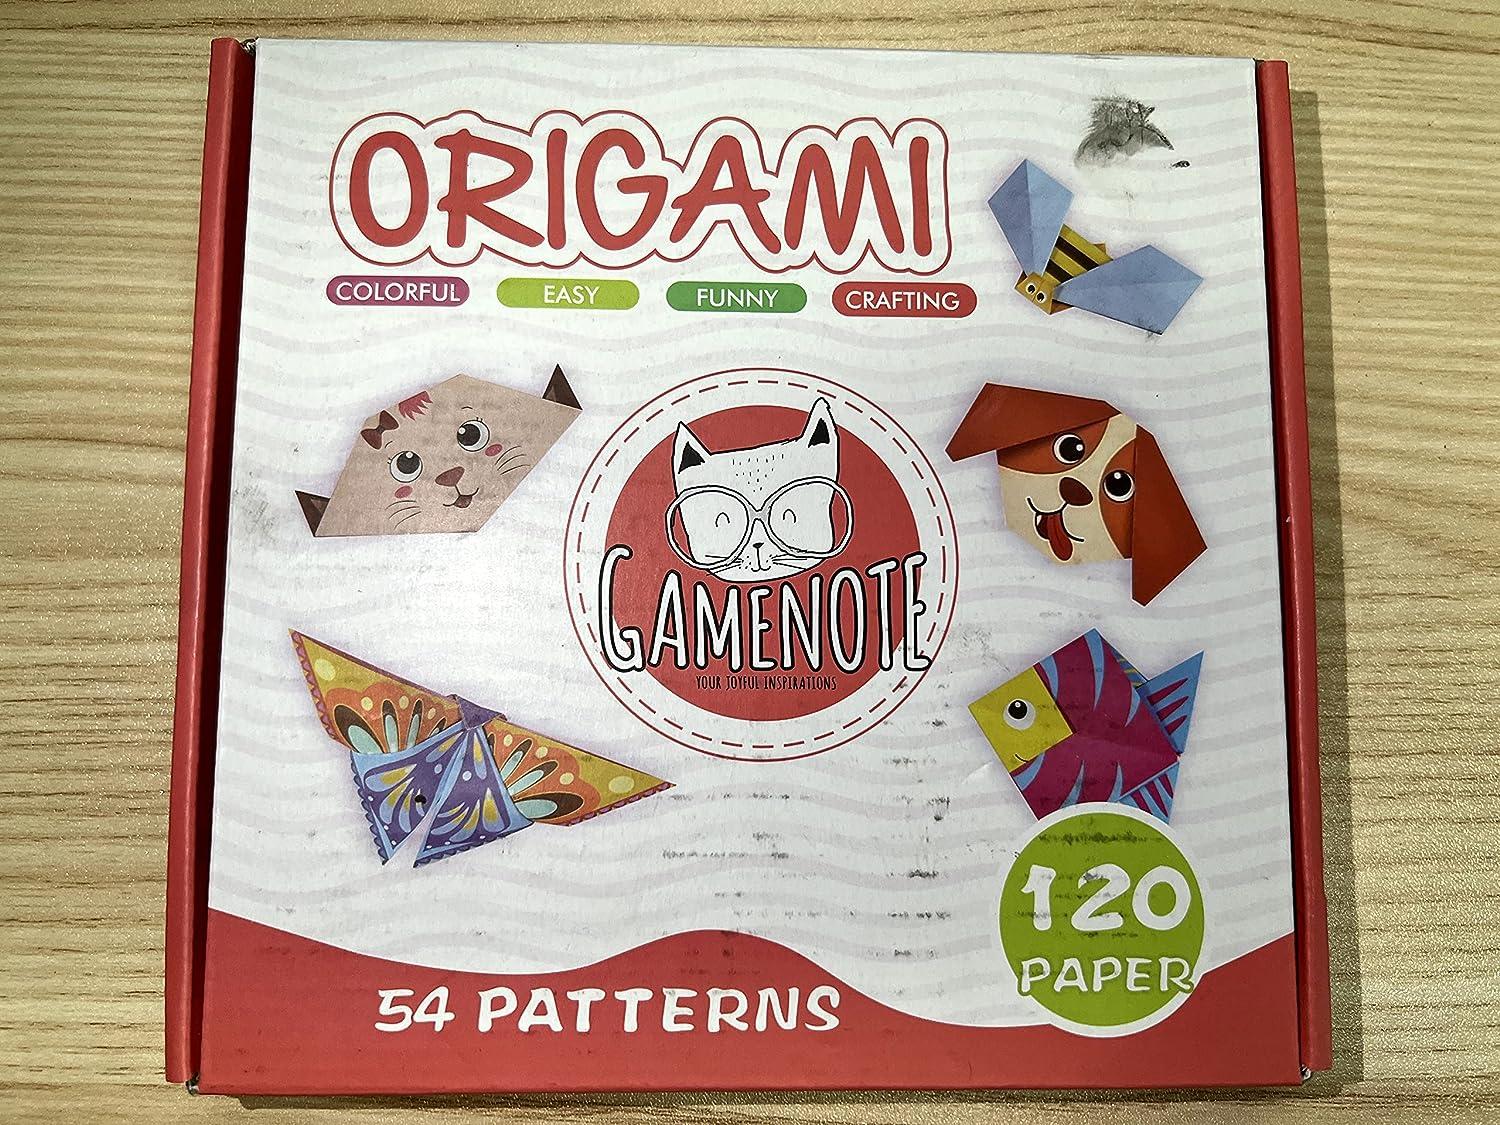 Gamenote 14x14 cm Kids Origami Kit - Multicolor, 108 Papers